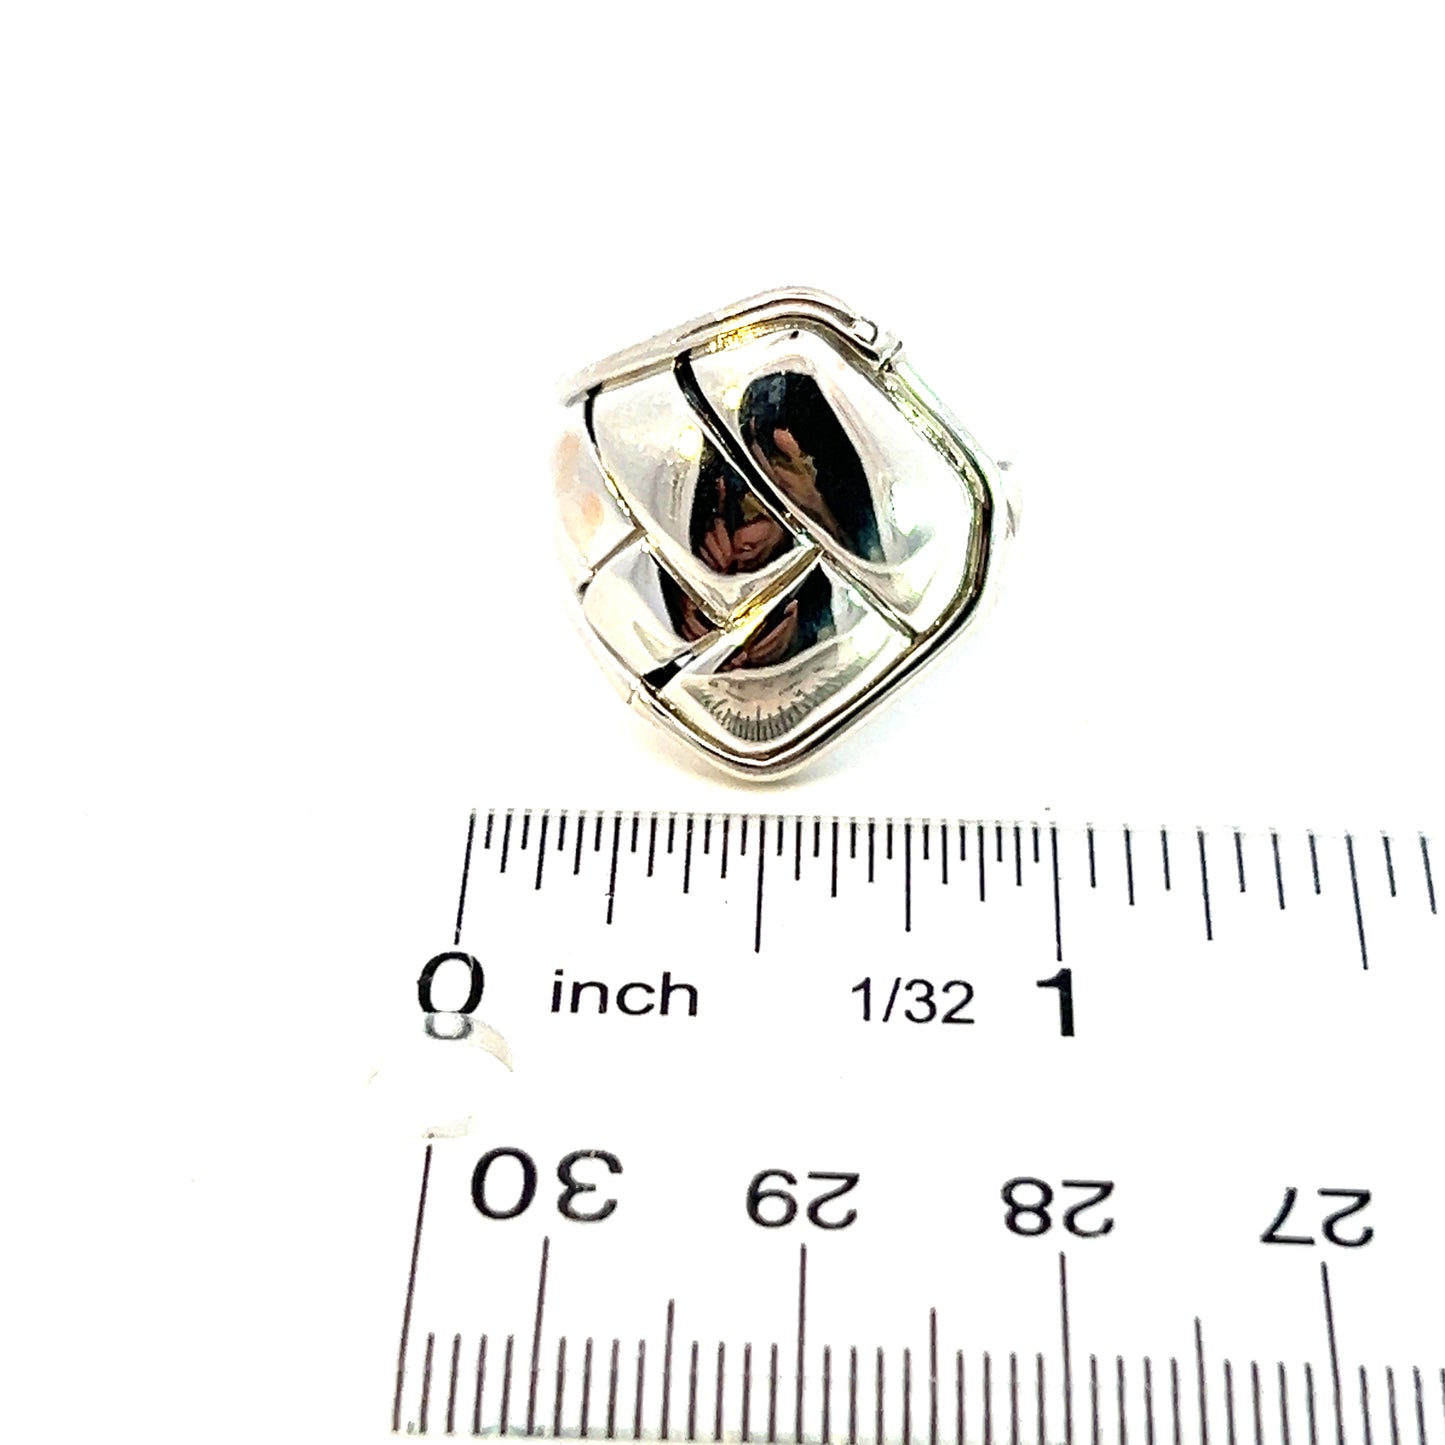 John Hardy Estate Woven Bamboo Style Ring 7.25 Silver JH75 - Certified Fine Jewelry